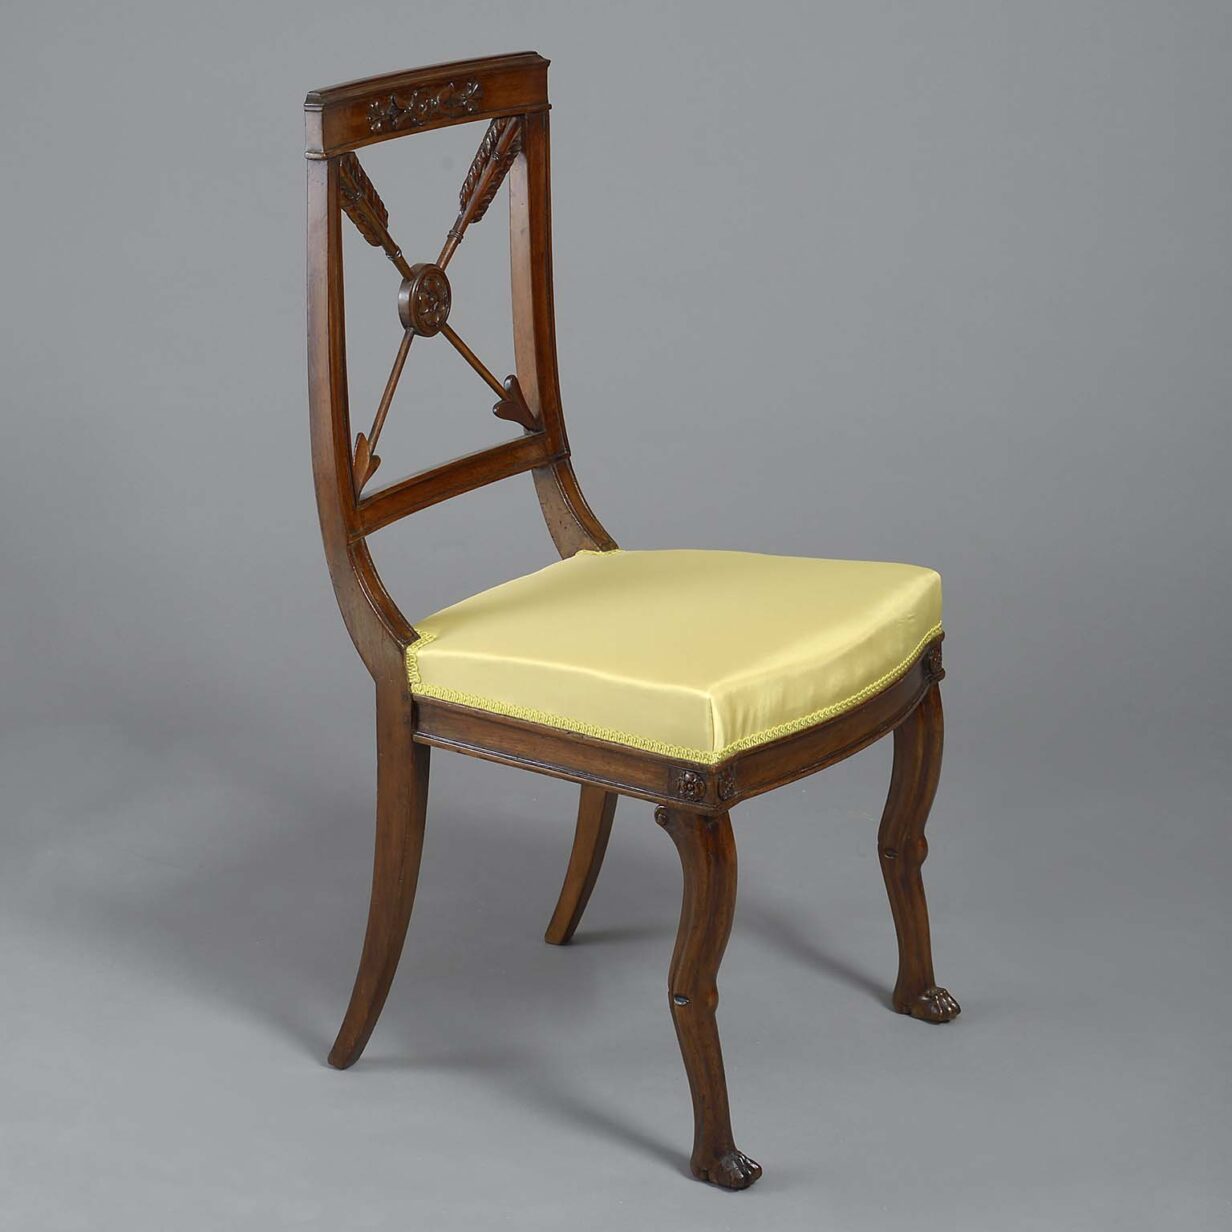 Twelve empire period mahogany dining chairs